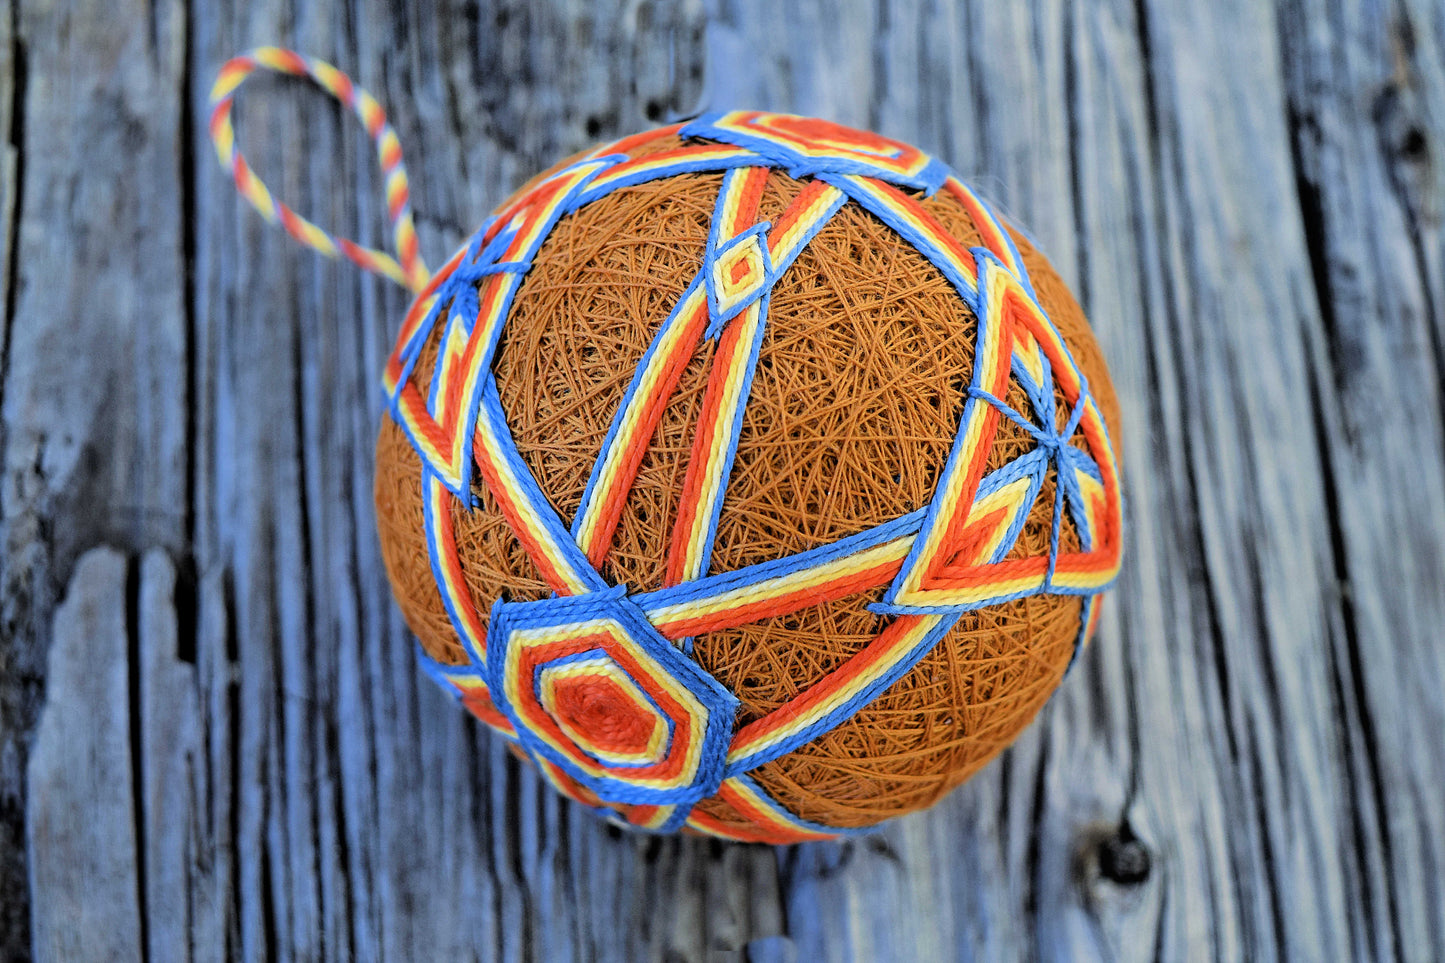 Japanese gold temari ball with orange and blue design